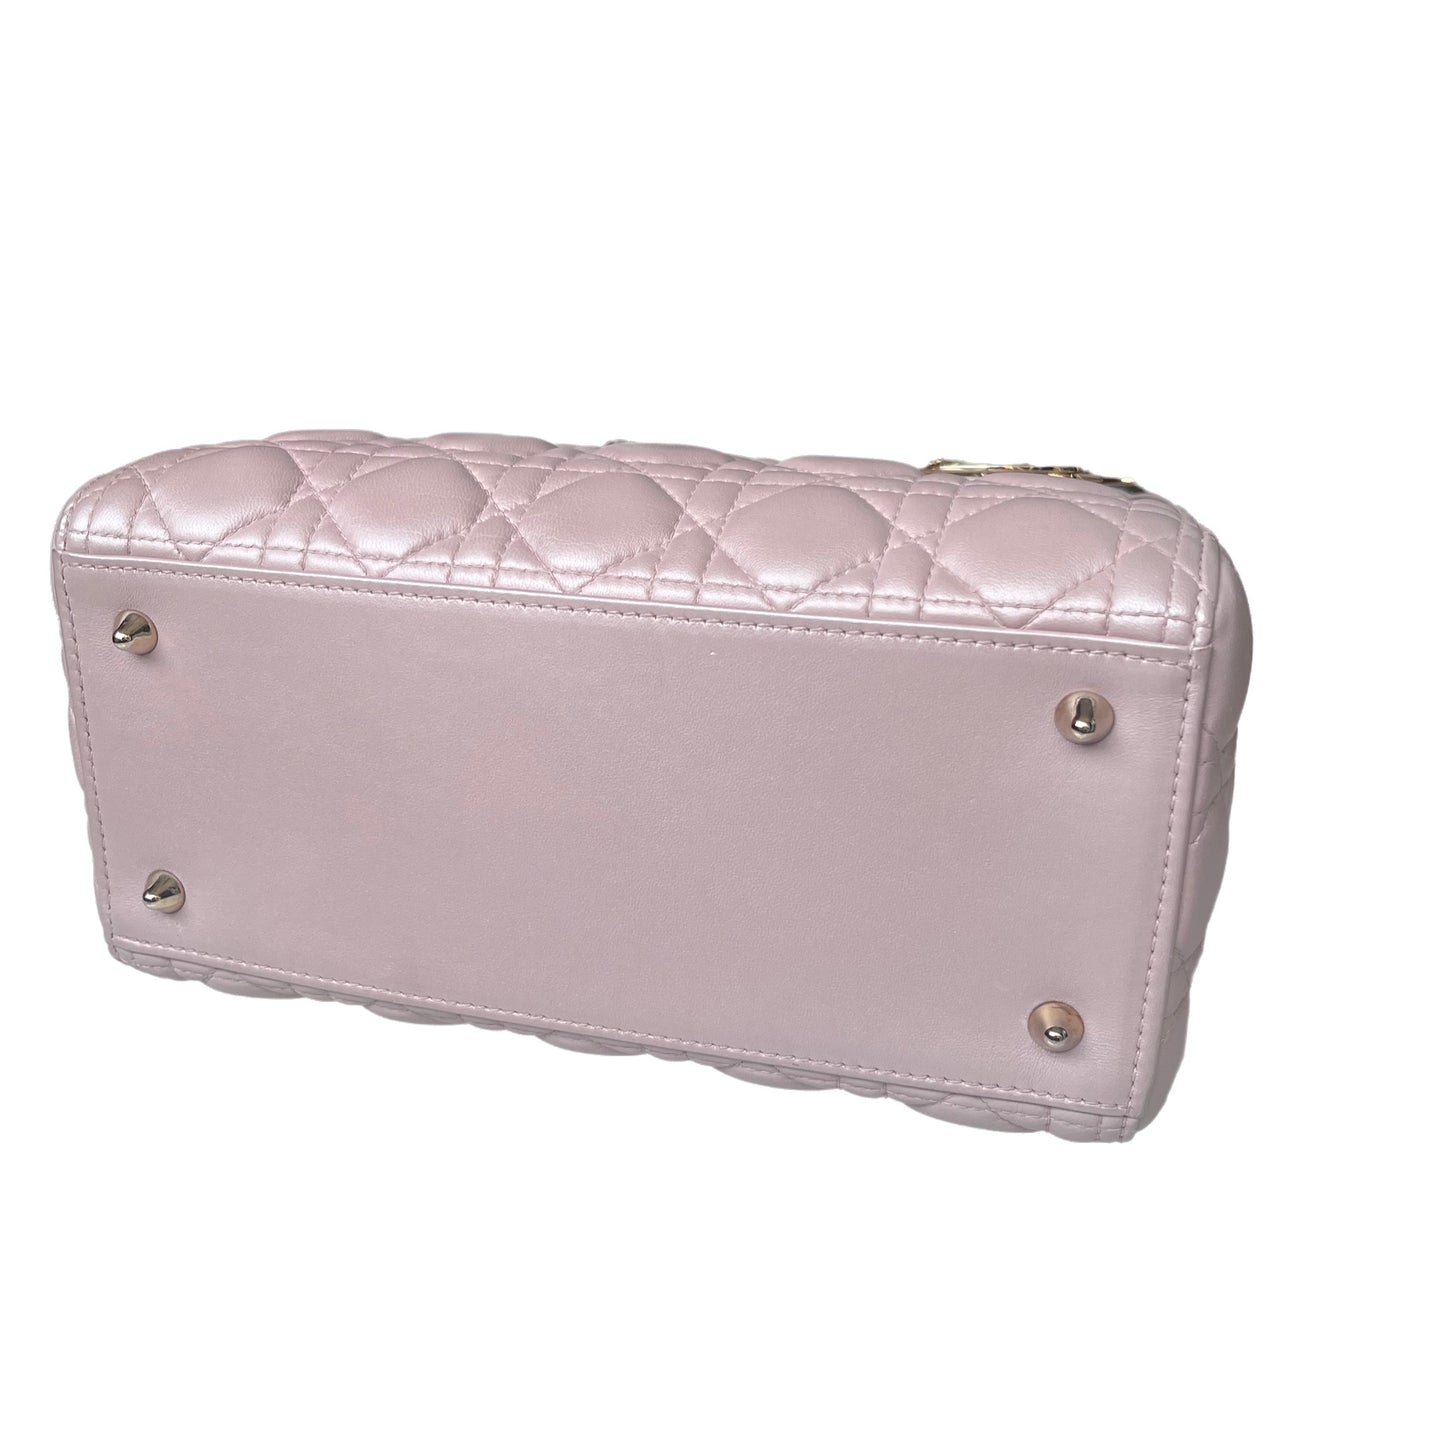 Lady Dior Medium Handbag Pearlescent Pink Cannage Leather Gold Hardware